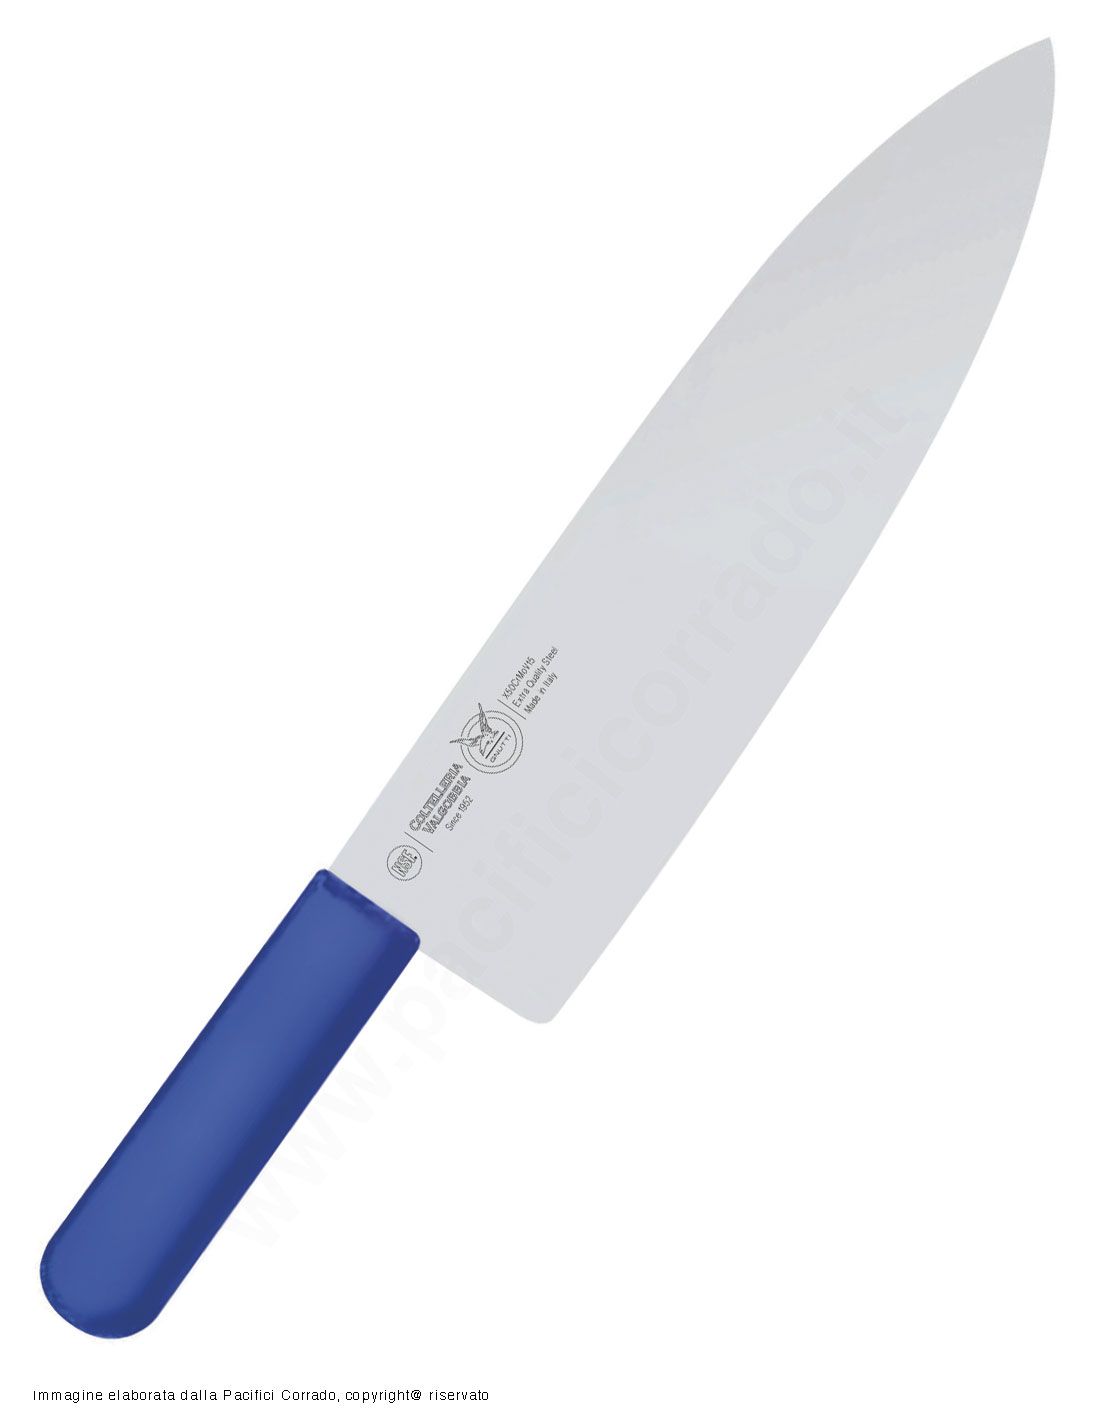 Valgobbia - coltello da fetta e colpo banco rm kg 0,5 cm 36